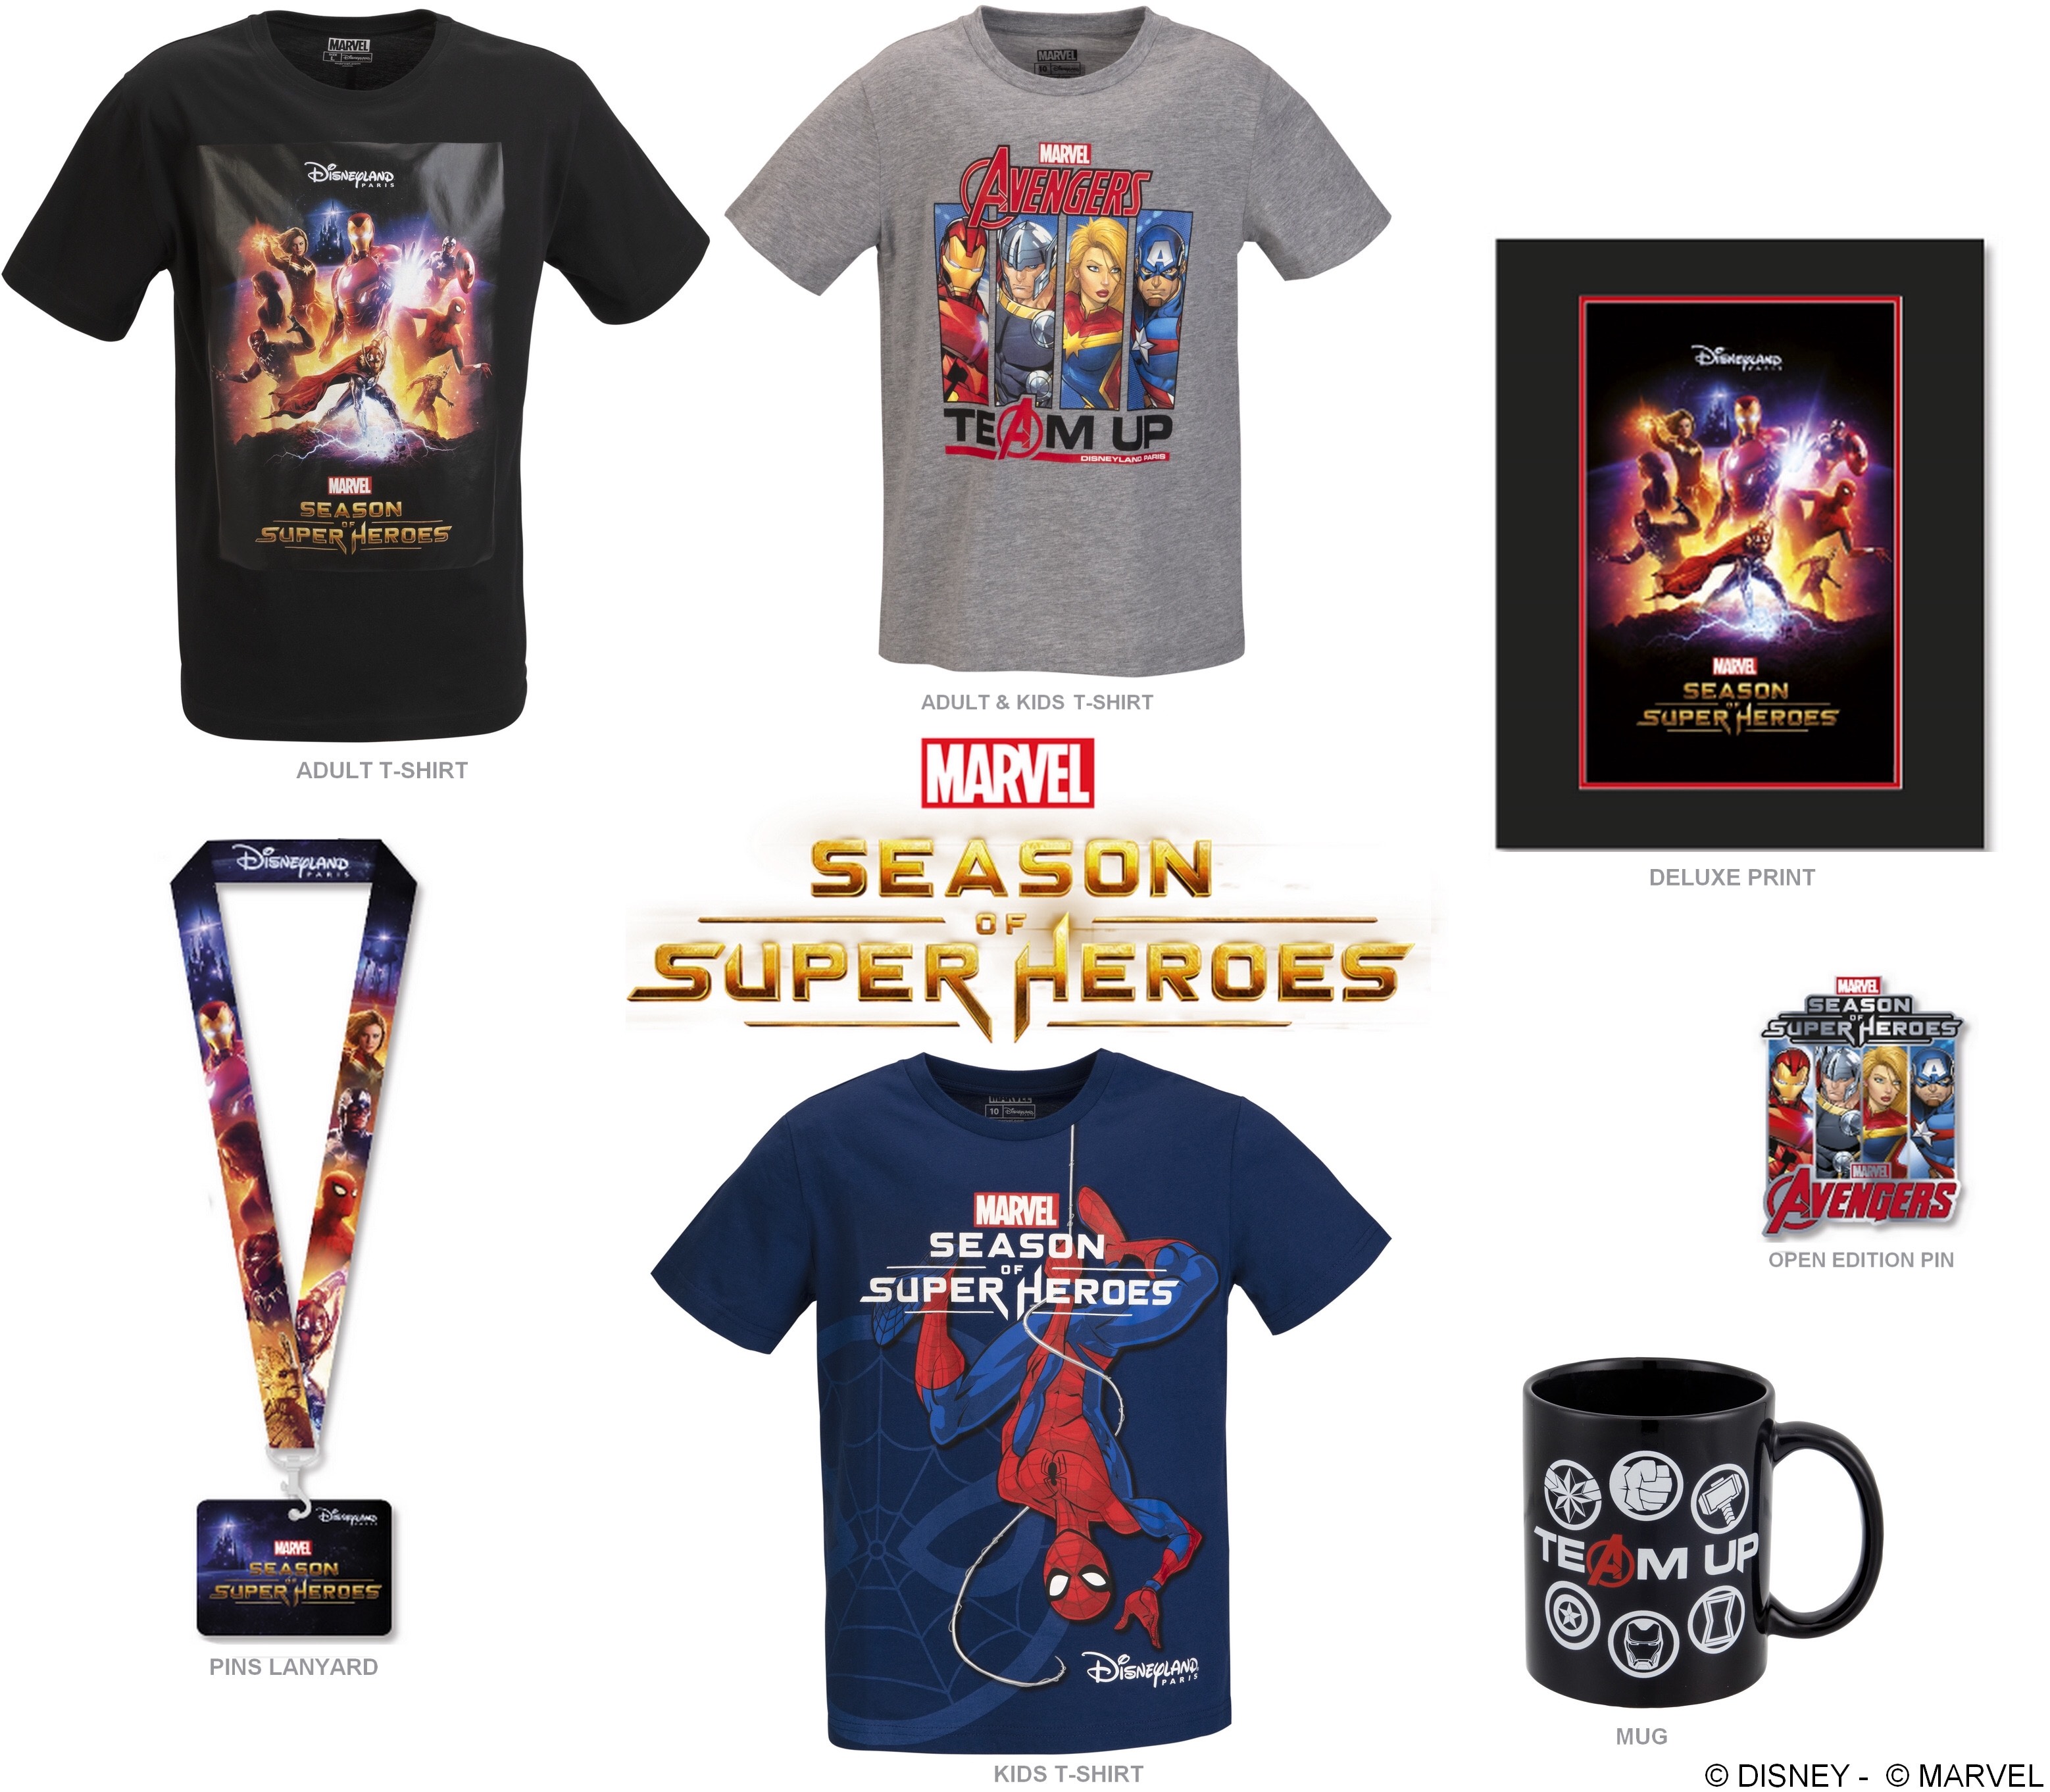 Marvel’s Season of Super-Heroes Merchandise Released!